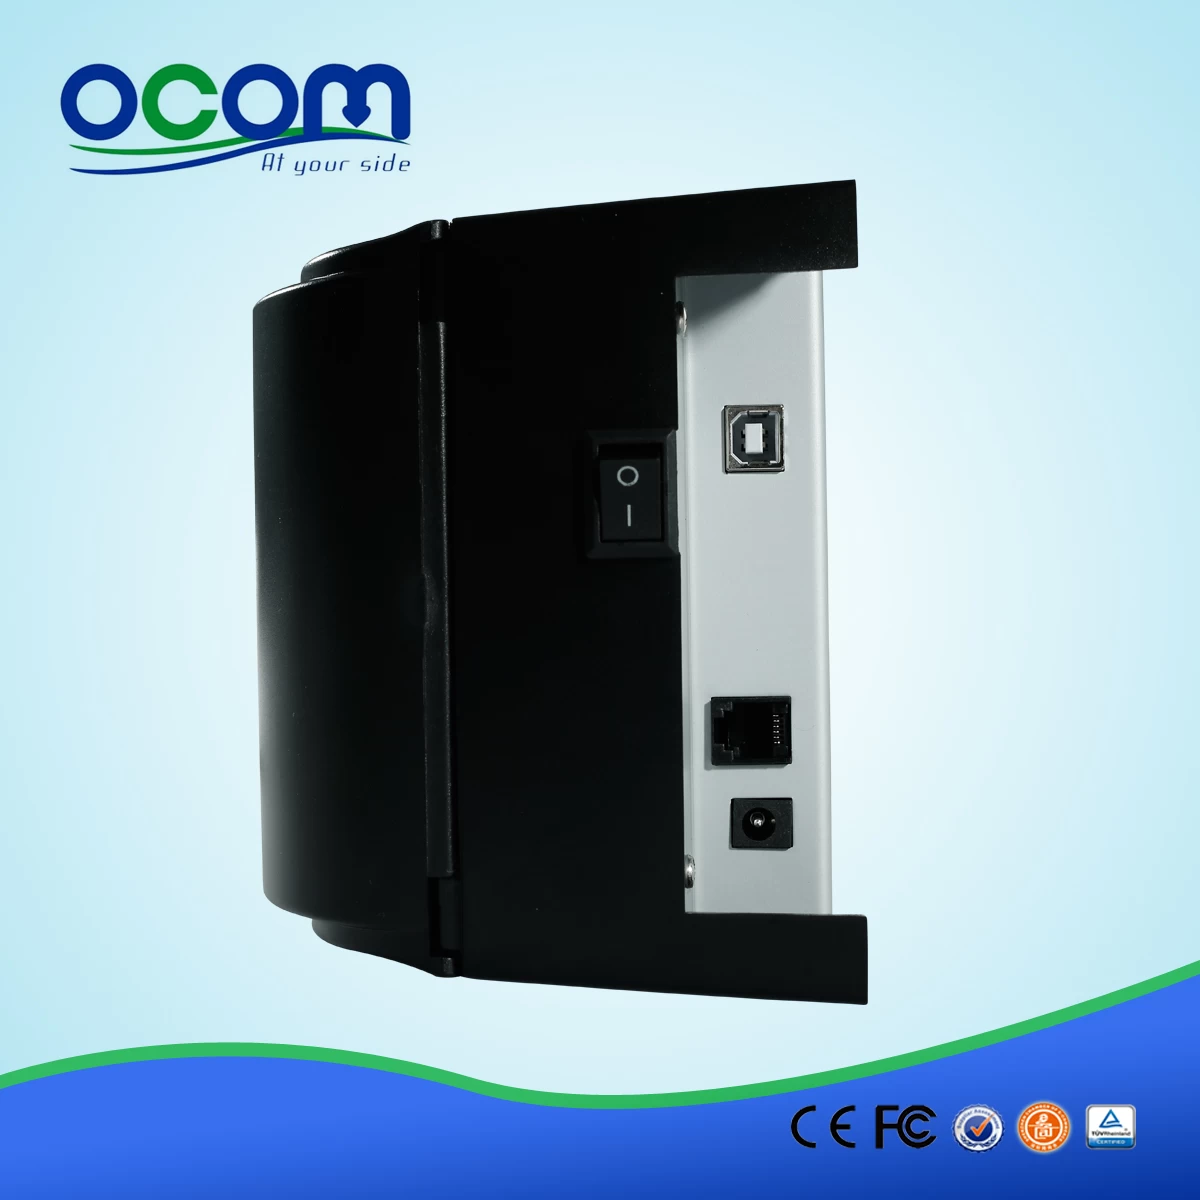 (OCPP-586) 58mm High Speed Pos Thermal Receipt Printer